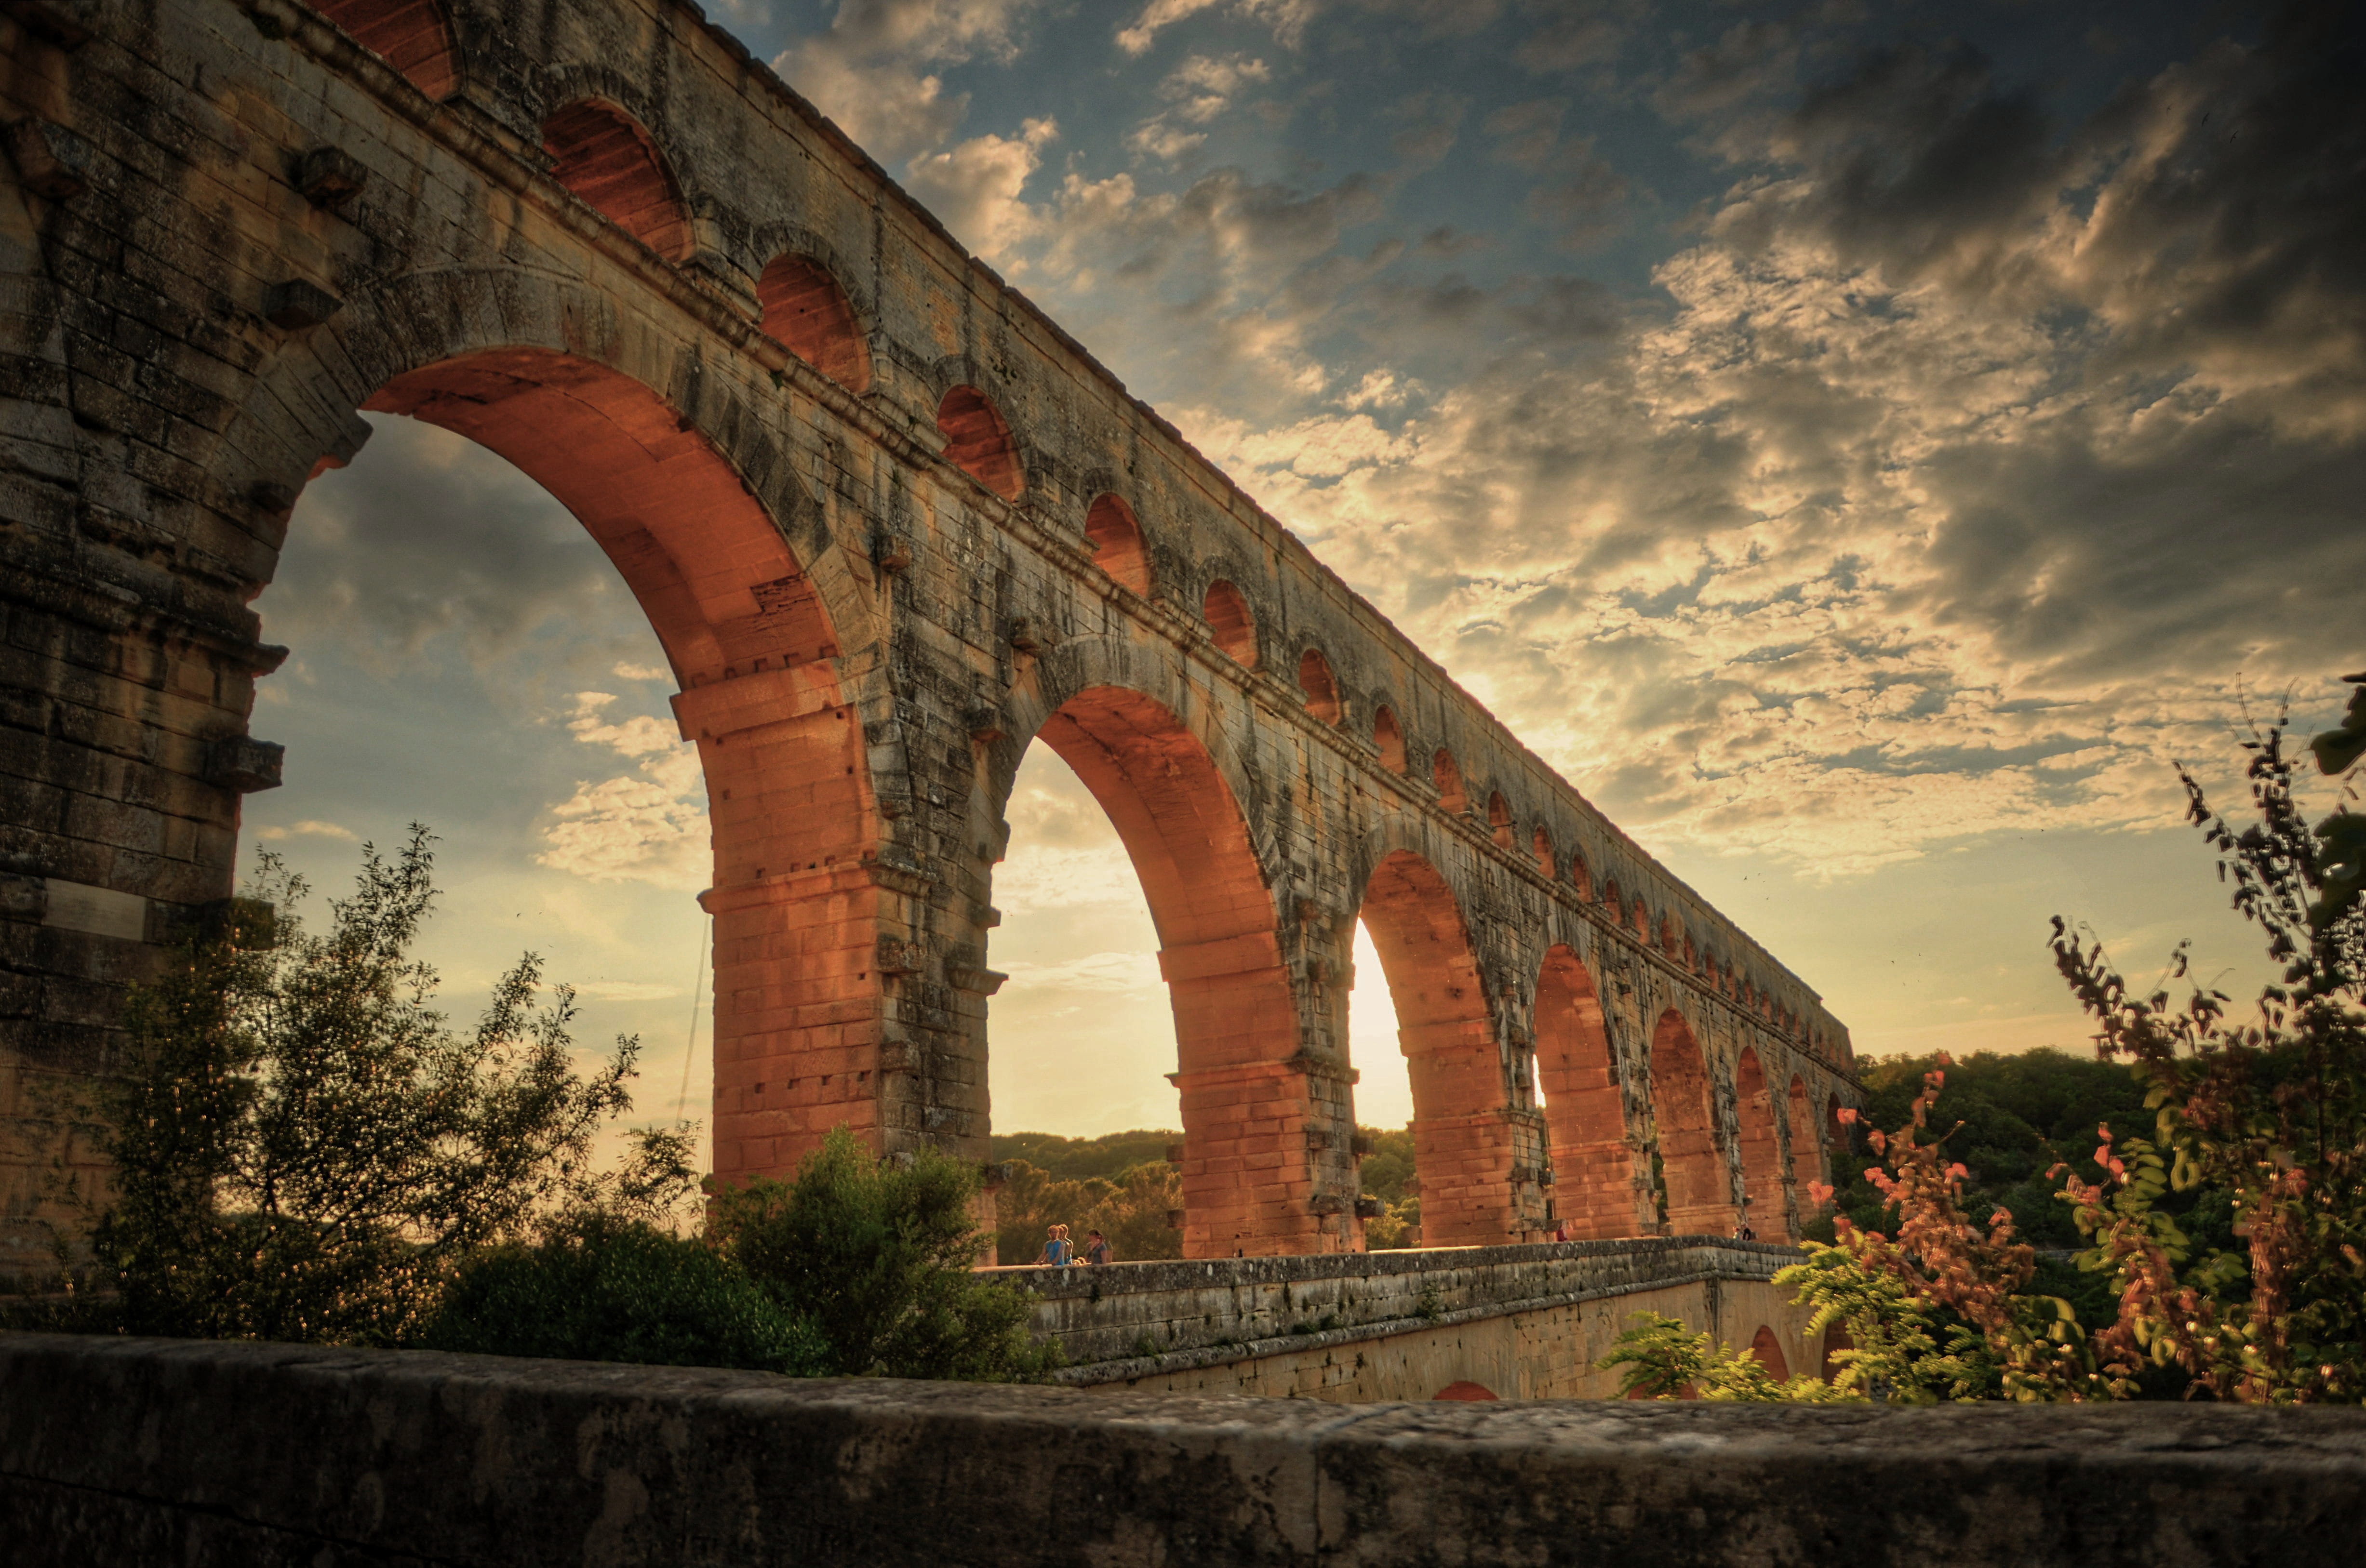 Pont Du Gard, Hdr, Bridge, France, Mood, bridge - Man Made Structure